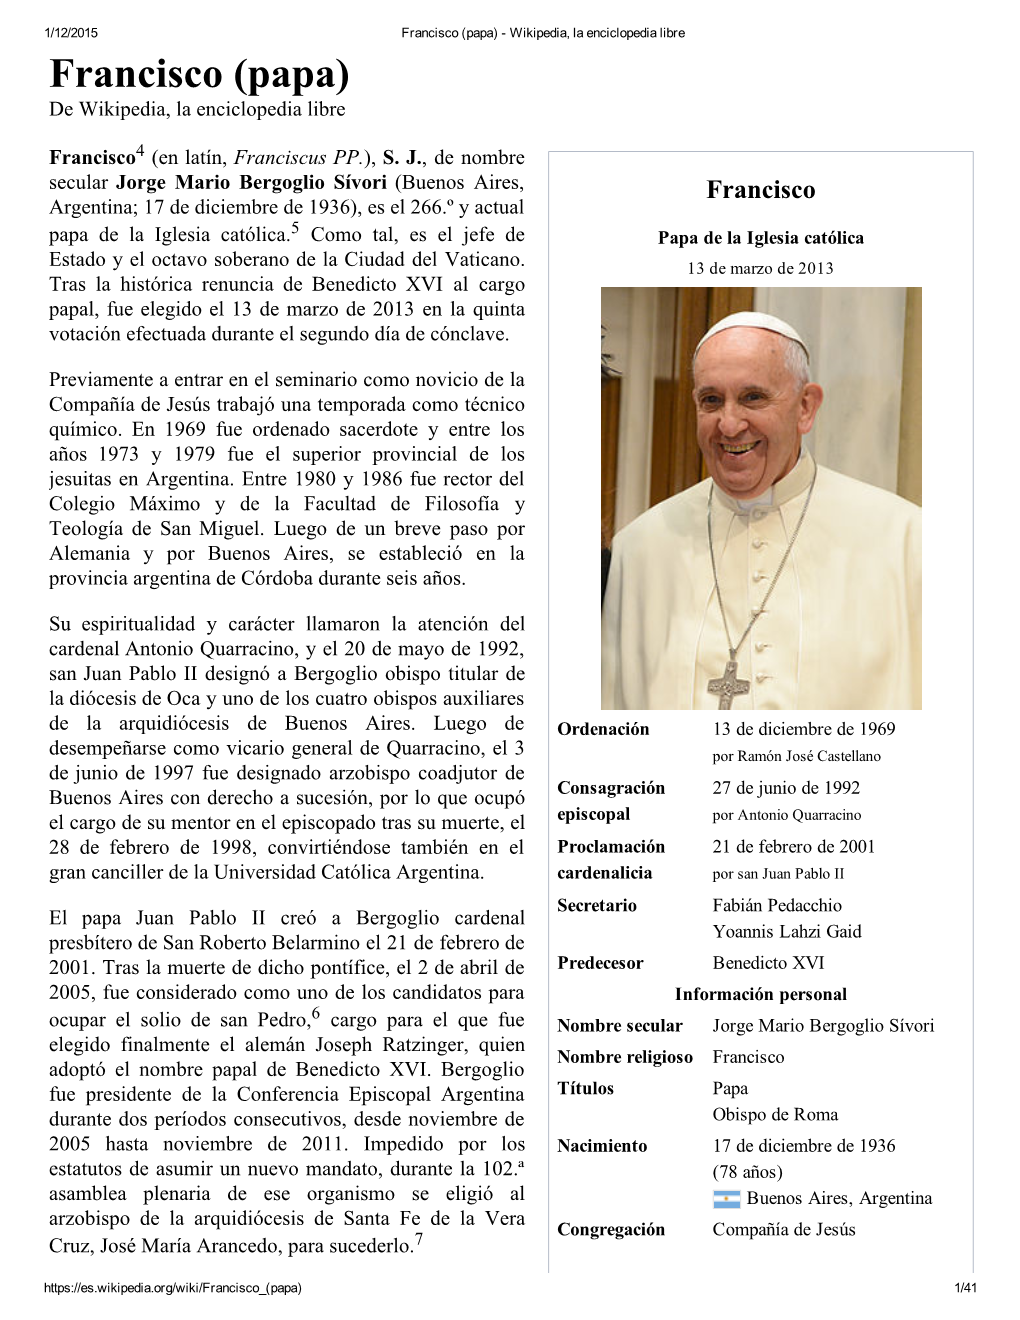 Francisco (Papa) ­ Wikipedia, La Enciclopedia Libre Francisco (Papa) De Wikipedia, La Enciclopedia Libre